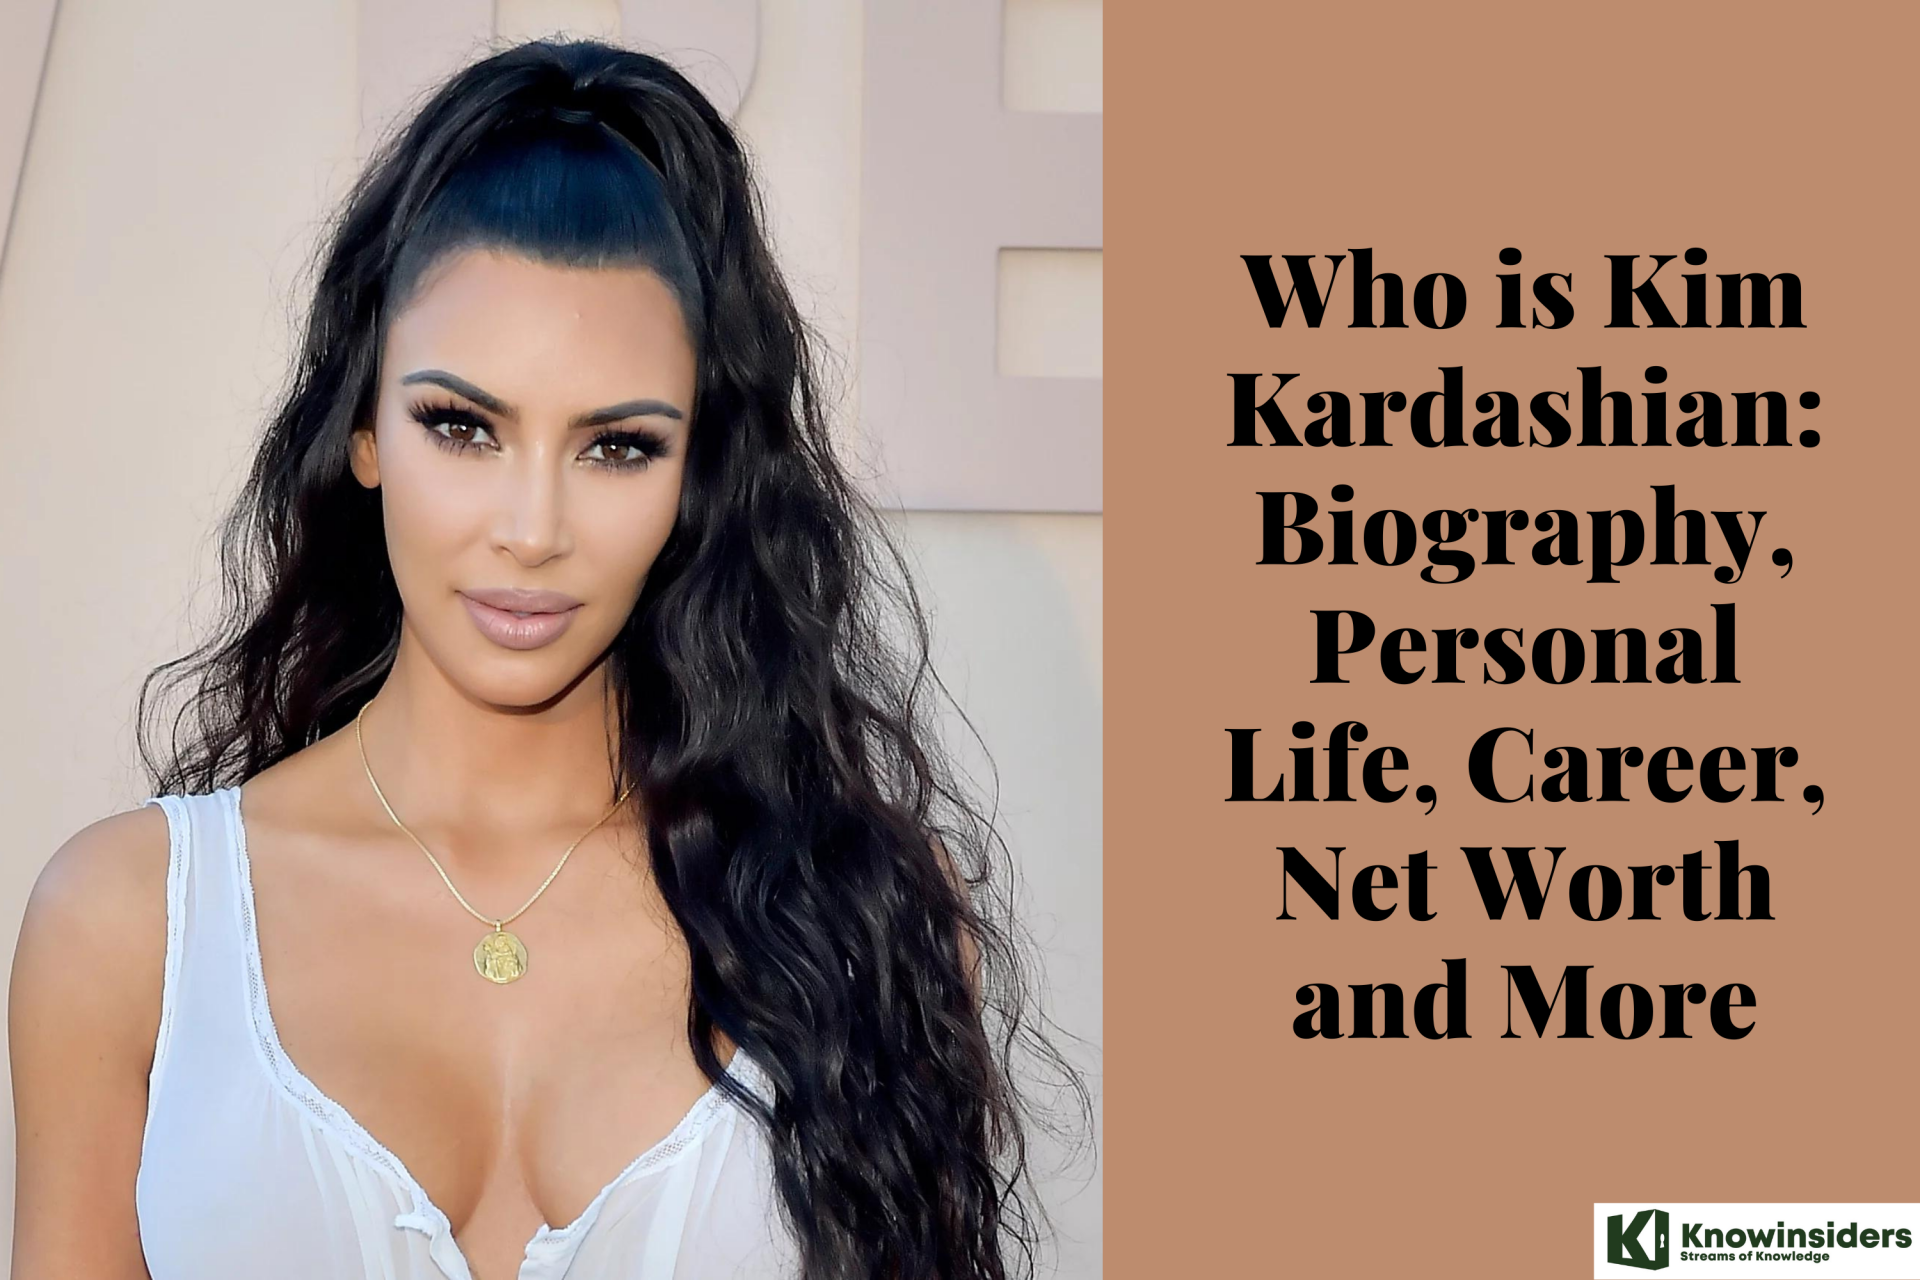 Who is Kim Kardashian: Biography, Personal Life, Career, Net Worth and More